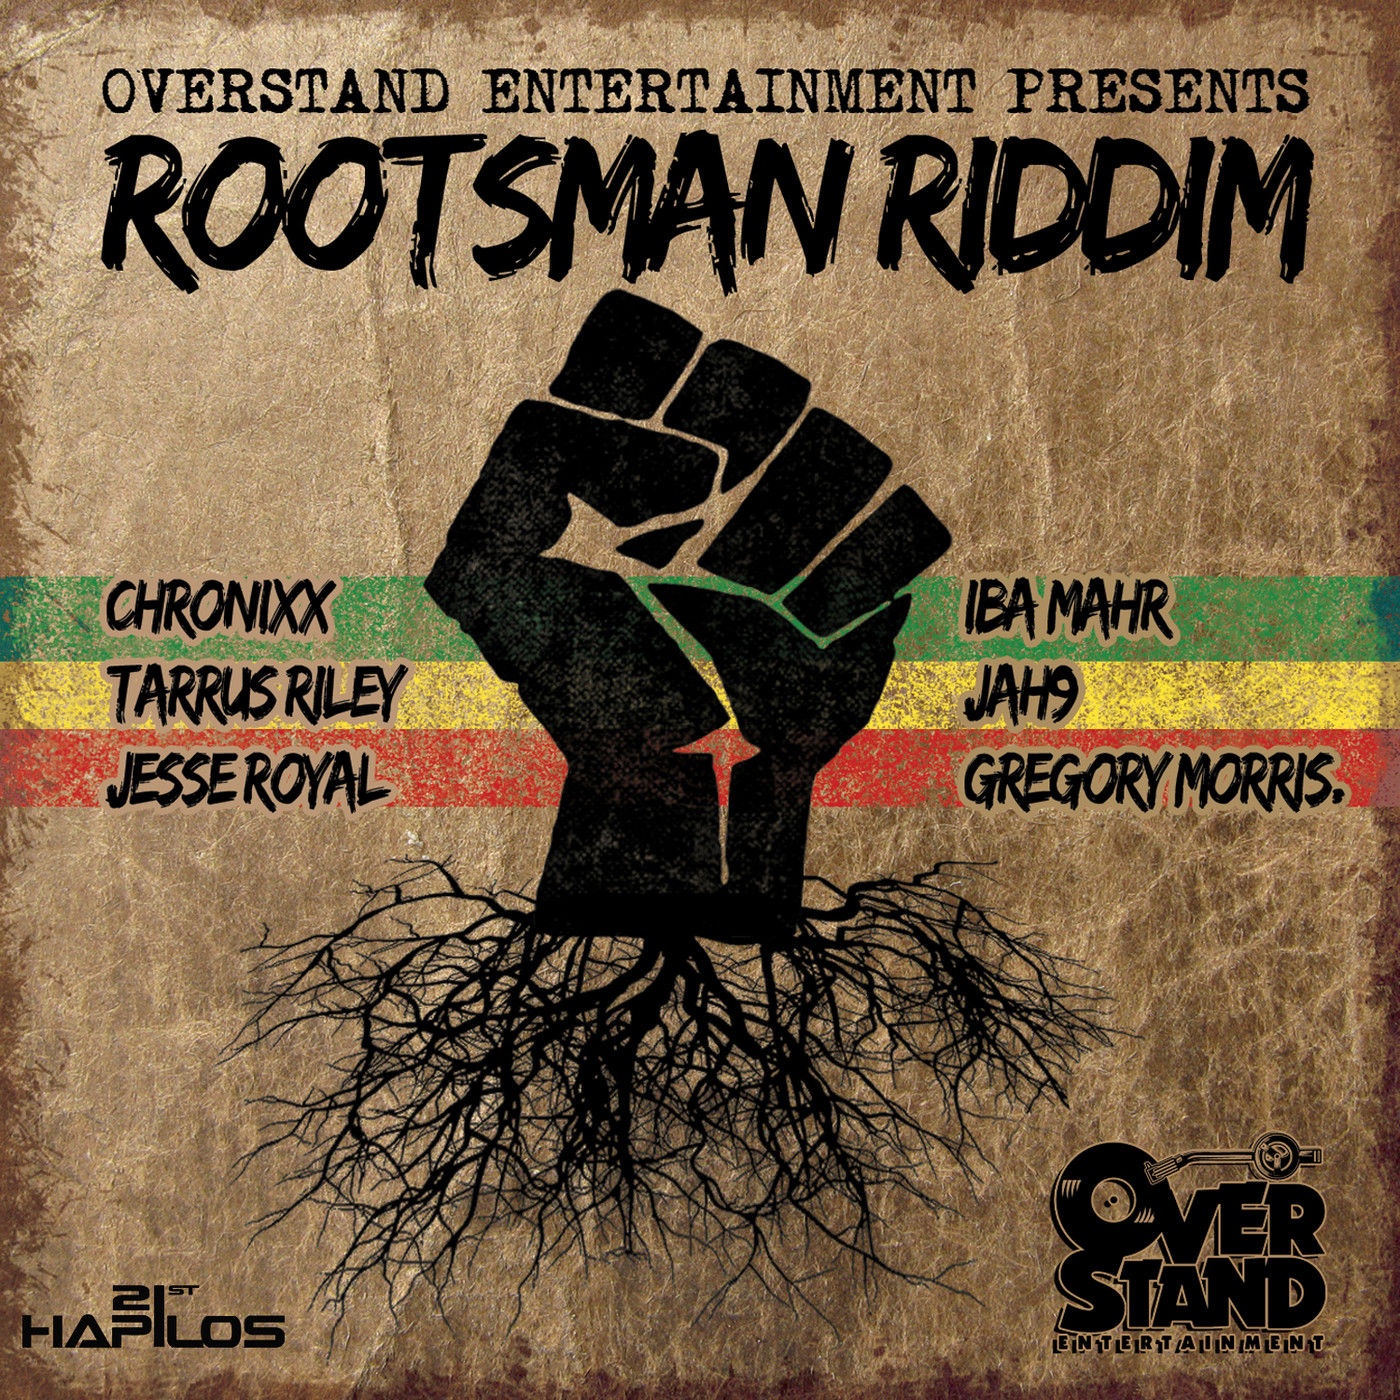 Rootsman Riddim